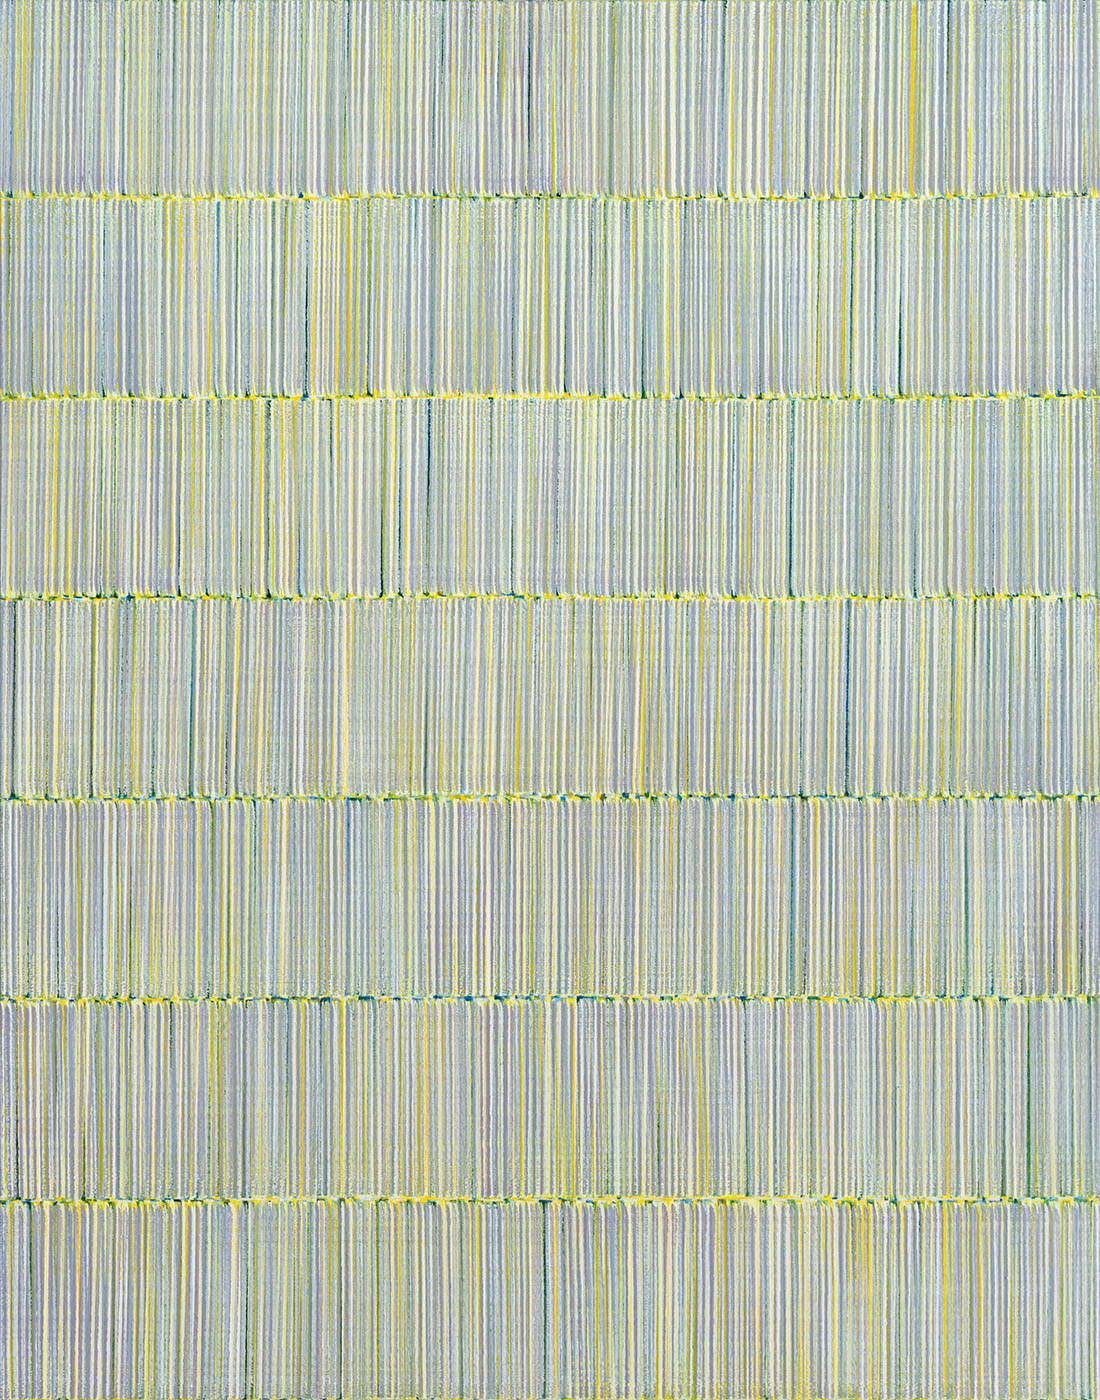 Nikola Dimitrov, FarbKlang VII, 2019, Pigmente, Bindemittel auf Leinwand, 140 × 110 cm